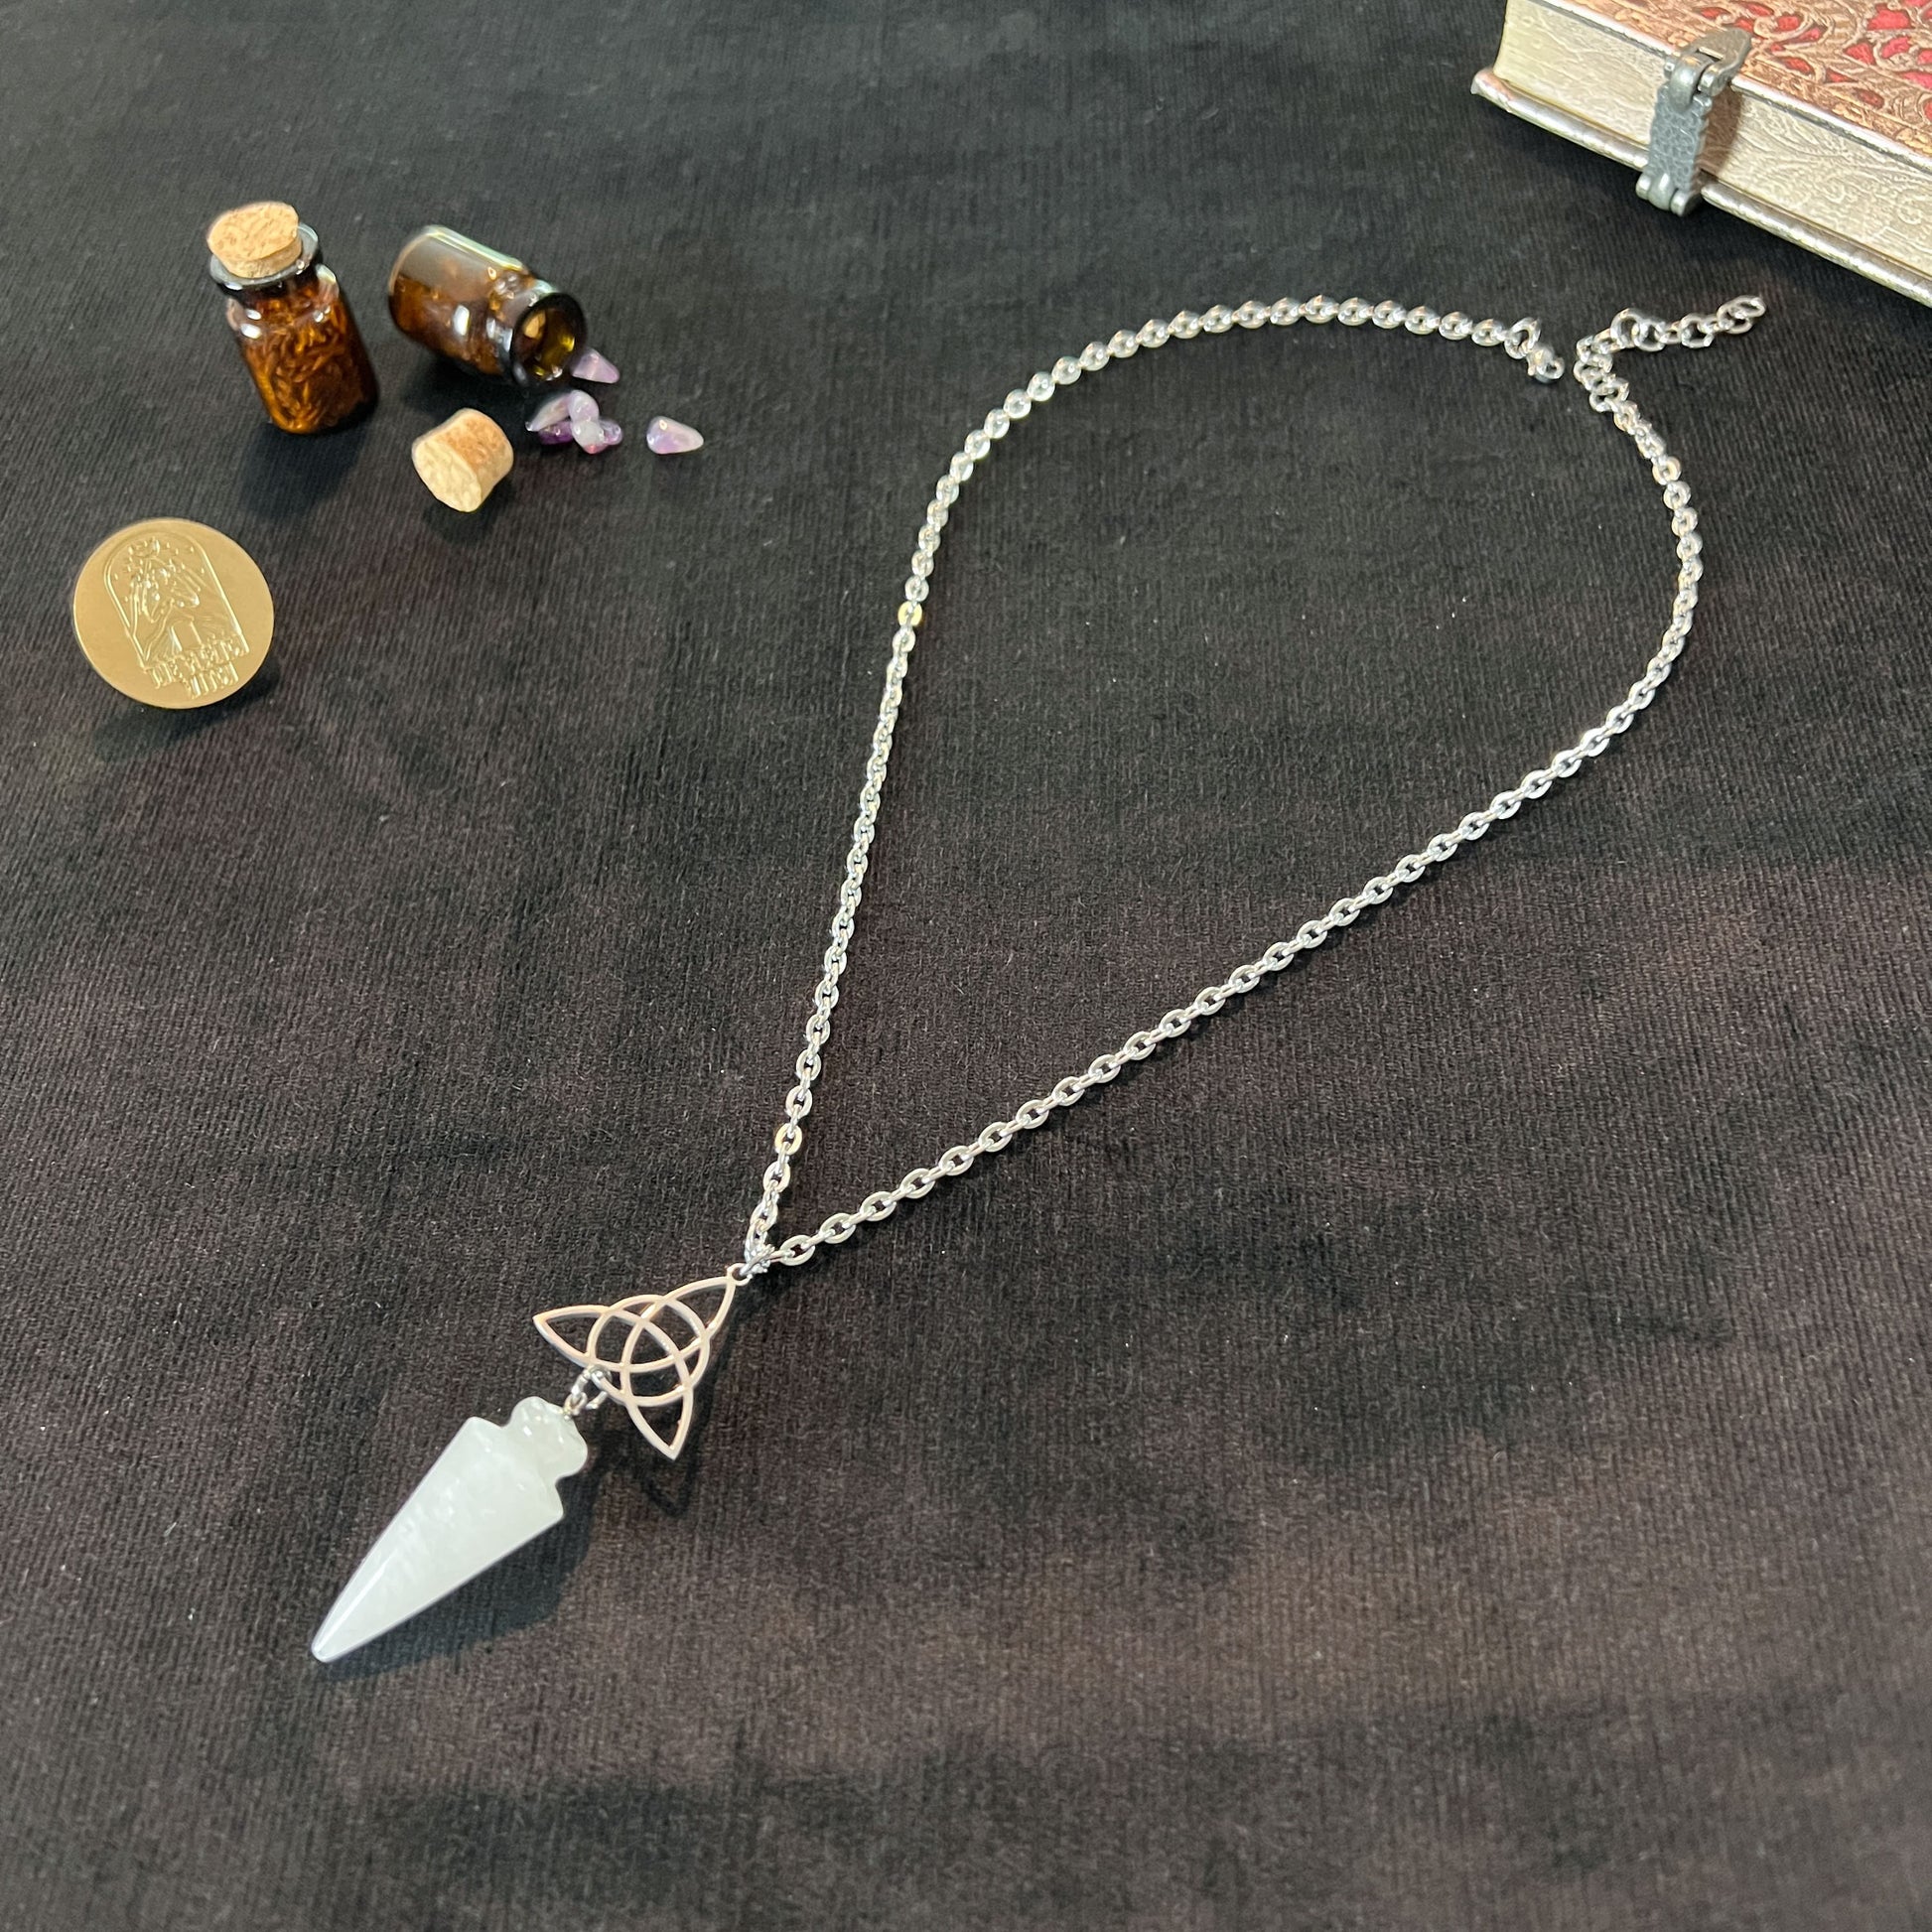 clear quartz gemstone pendulum necklace wiccan pagan jewelry triquetra celtic knot witch pendant